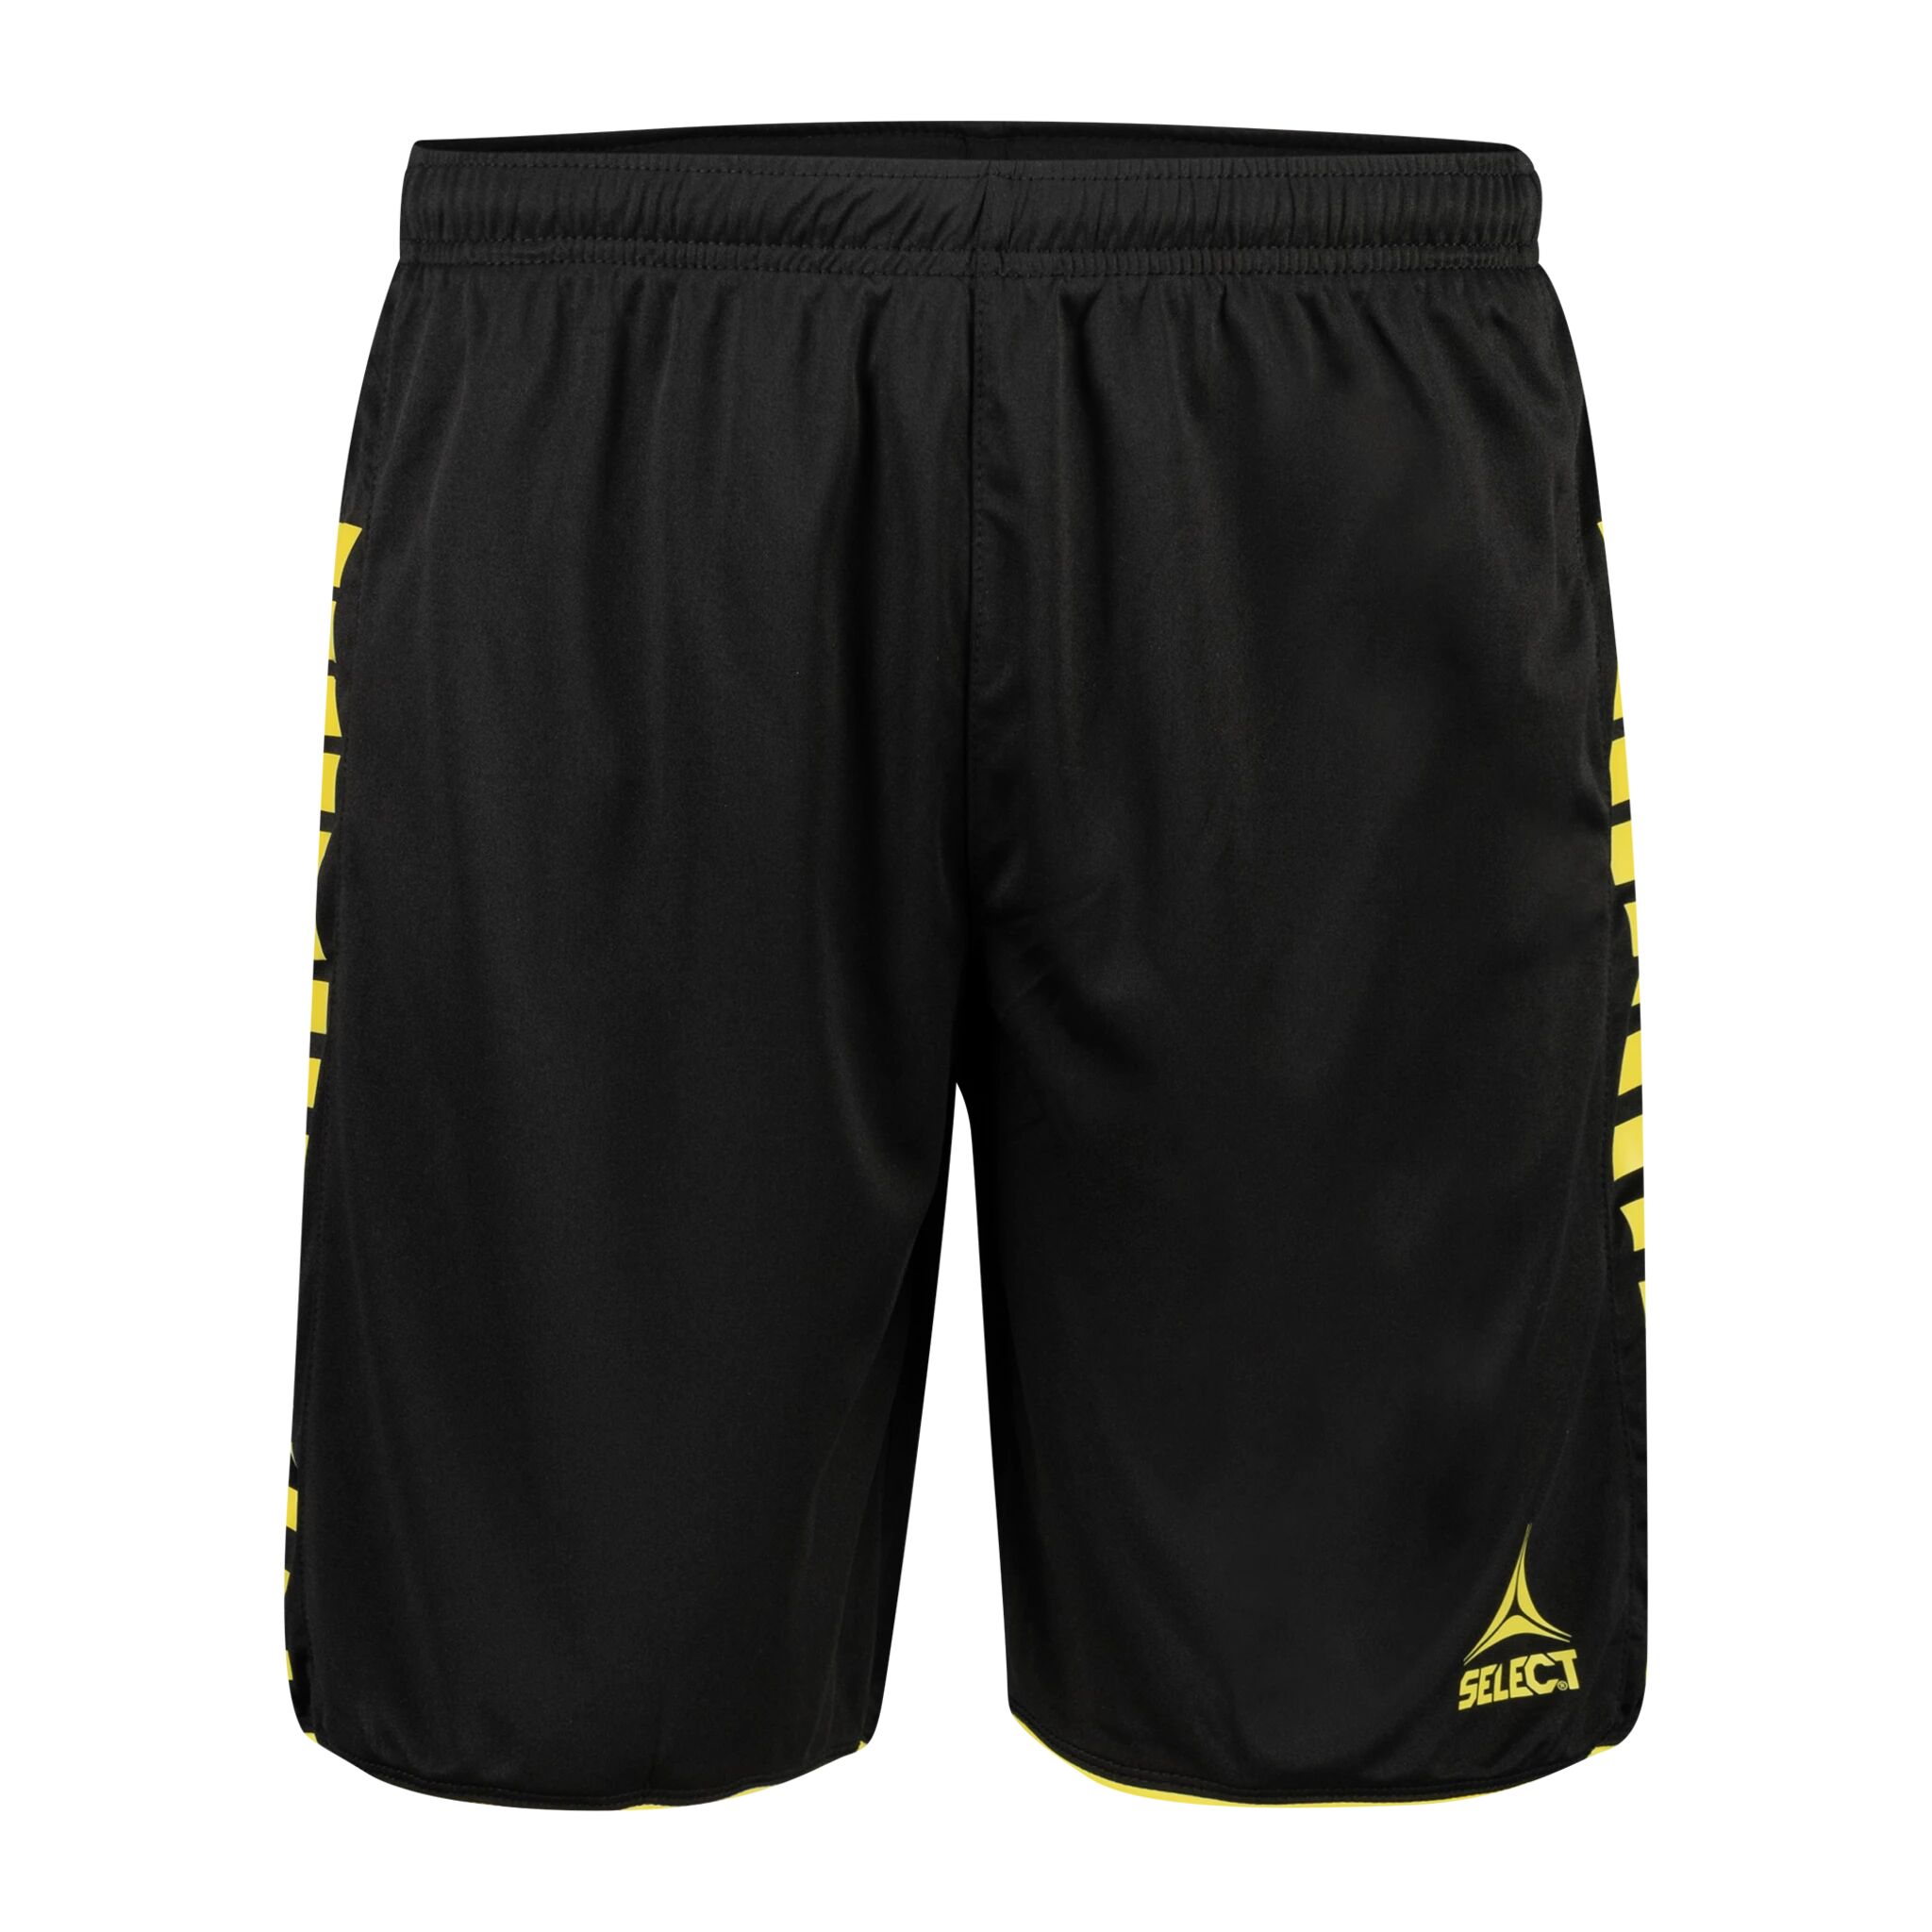 Select Player shorts Argentina, shorts Junior/Senior 164 Black/Yellow